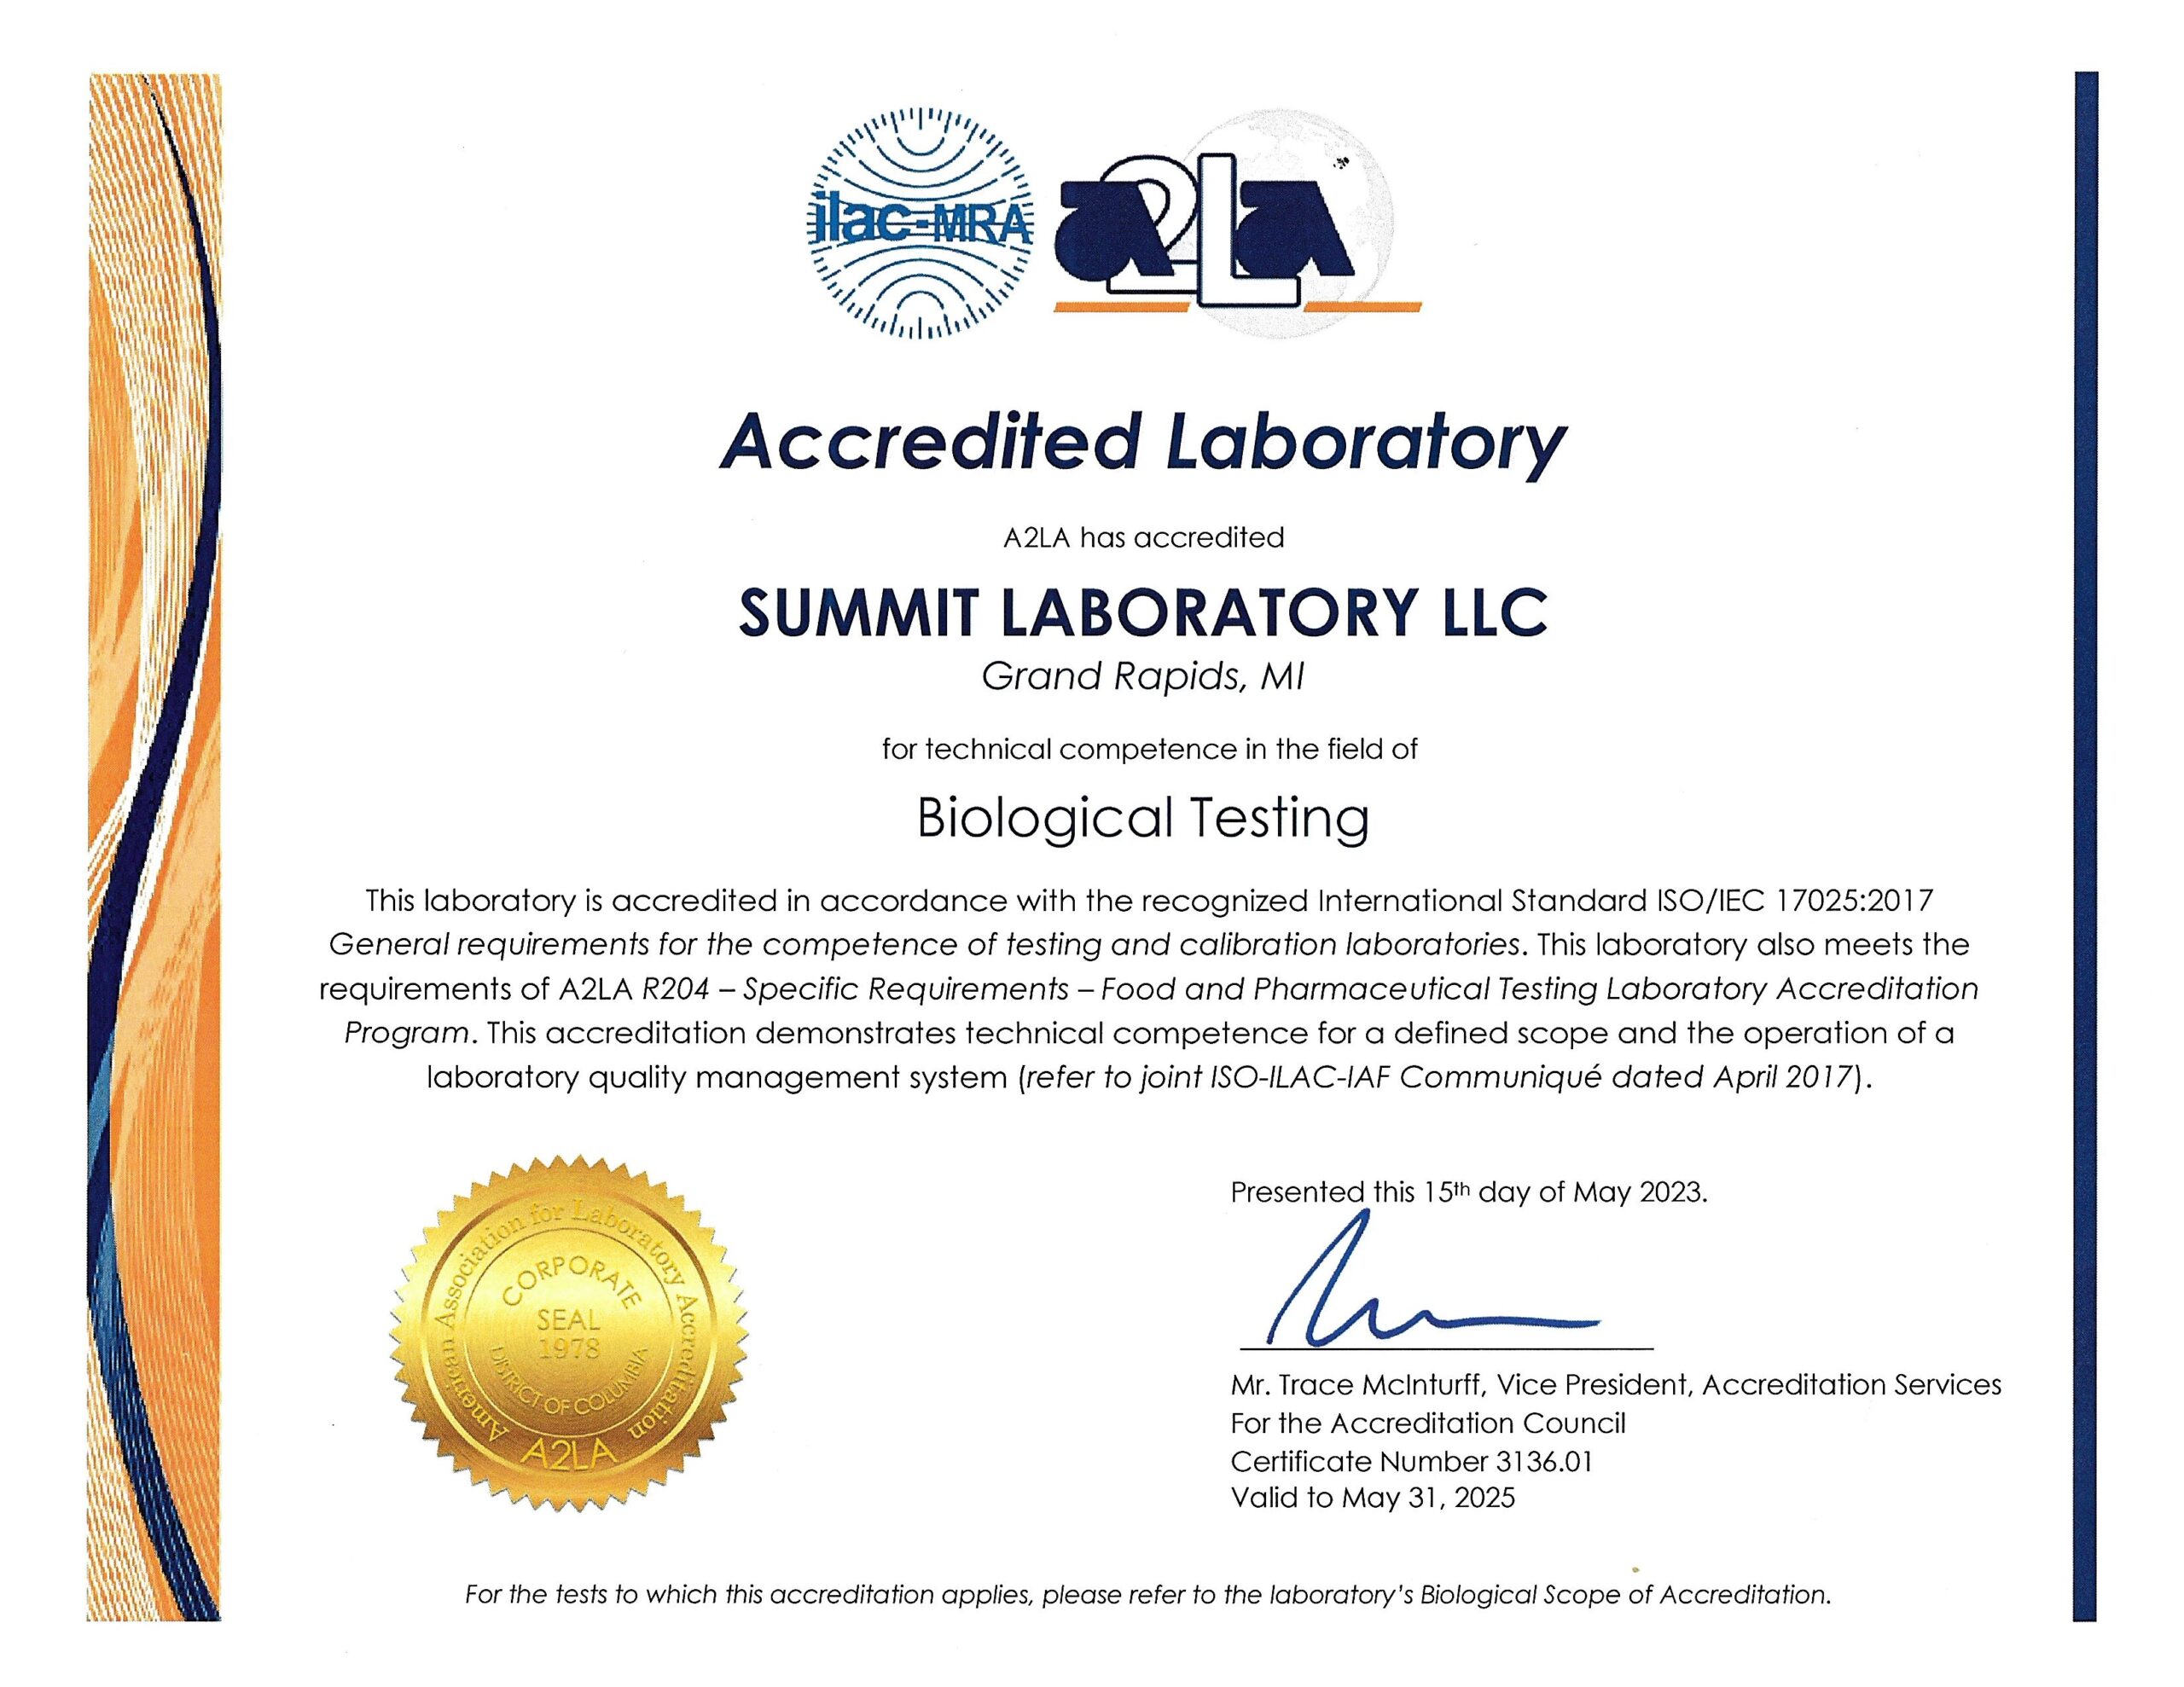 Summit A2LA ISO 17025 accredited methods scope 2020-3